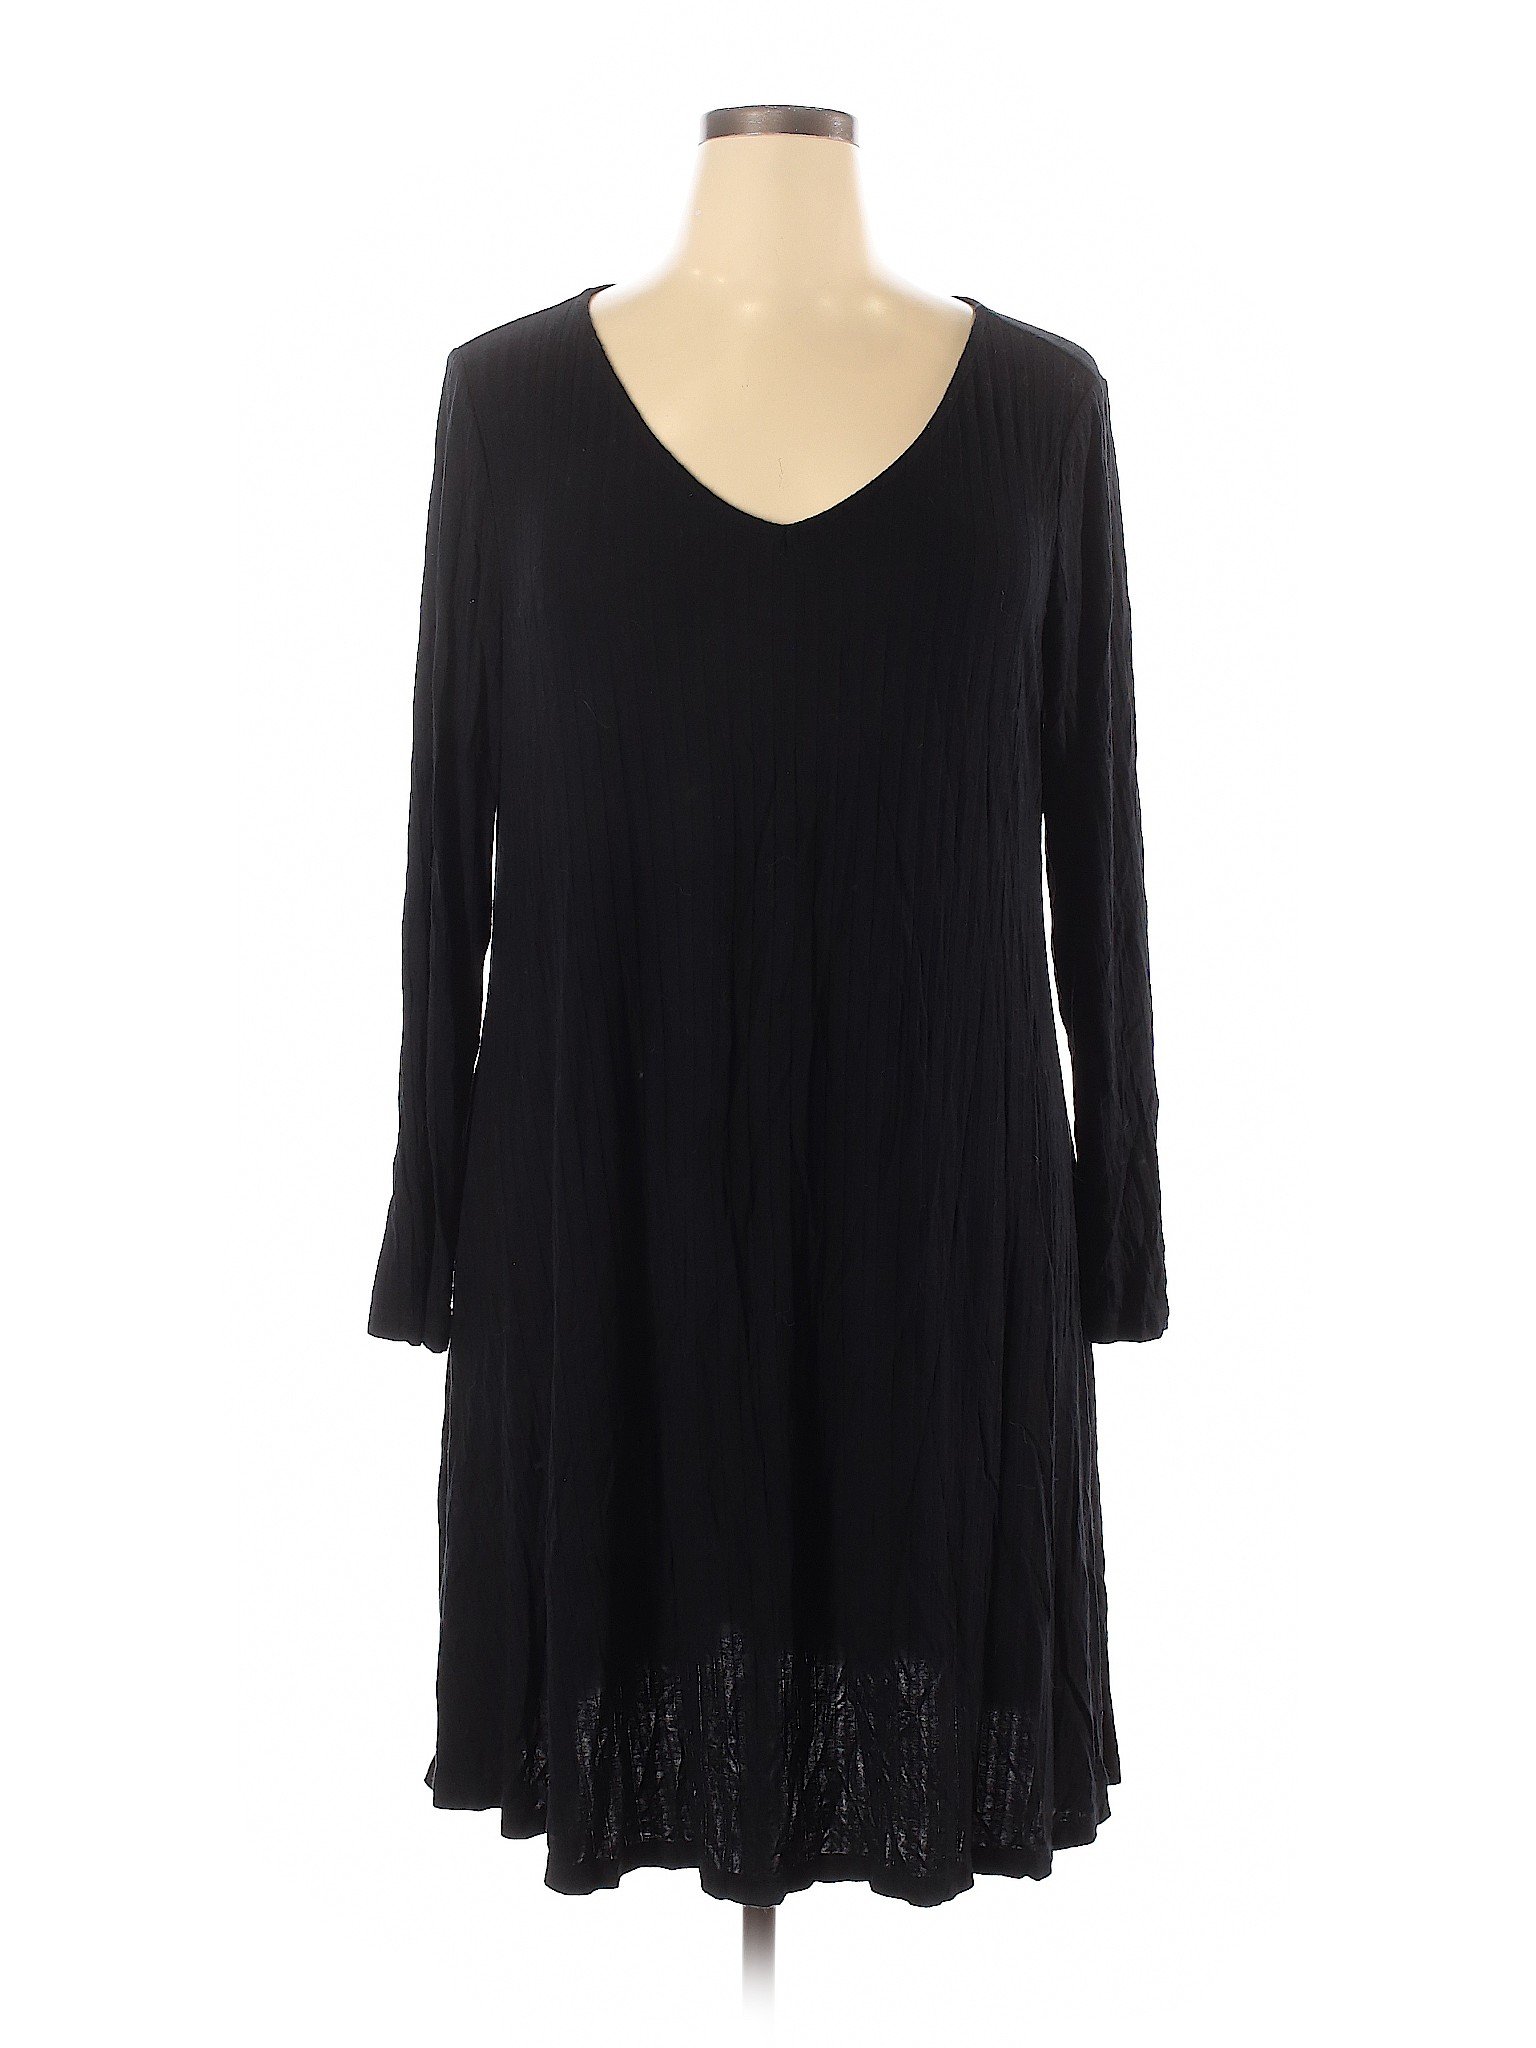 Apt. 9 Women Black Casual Dress 1X Plus | eBay